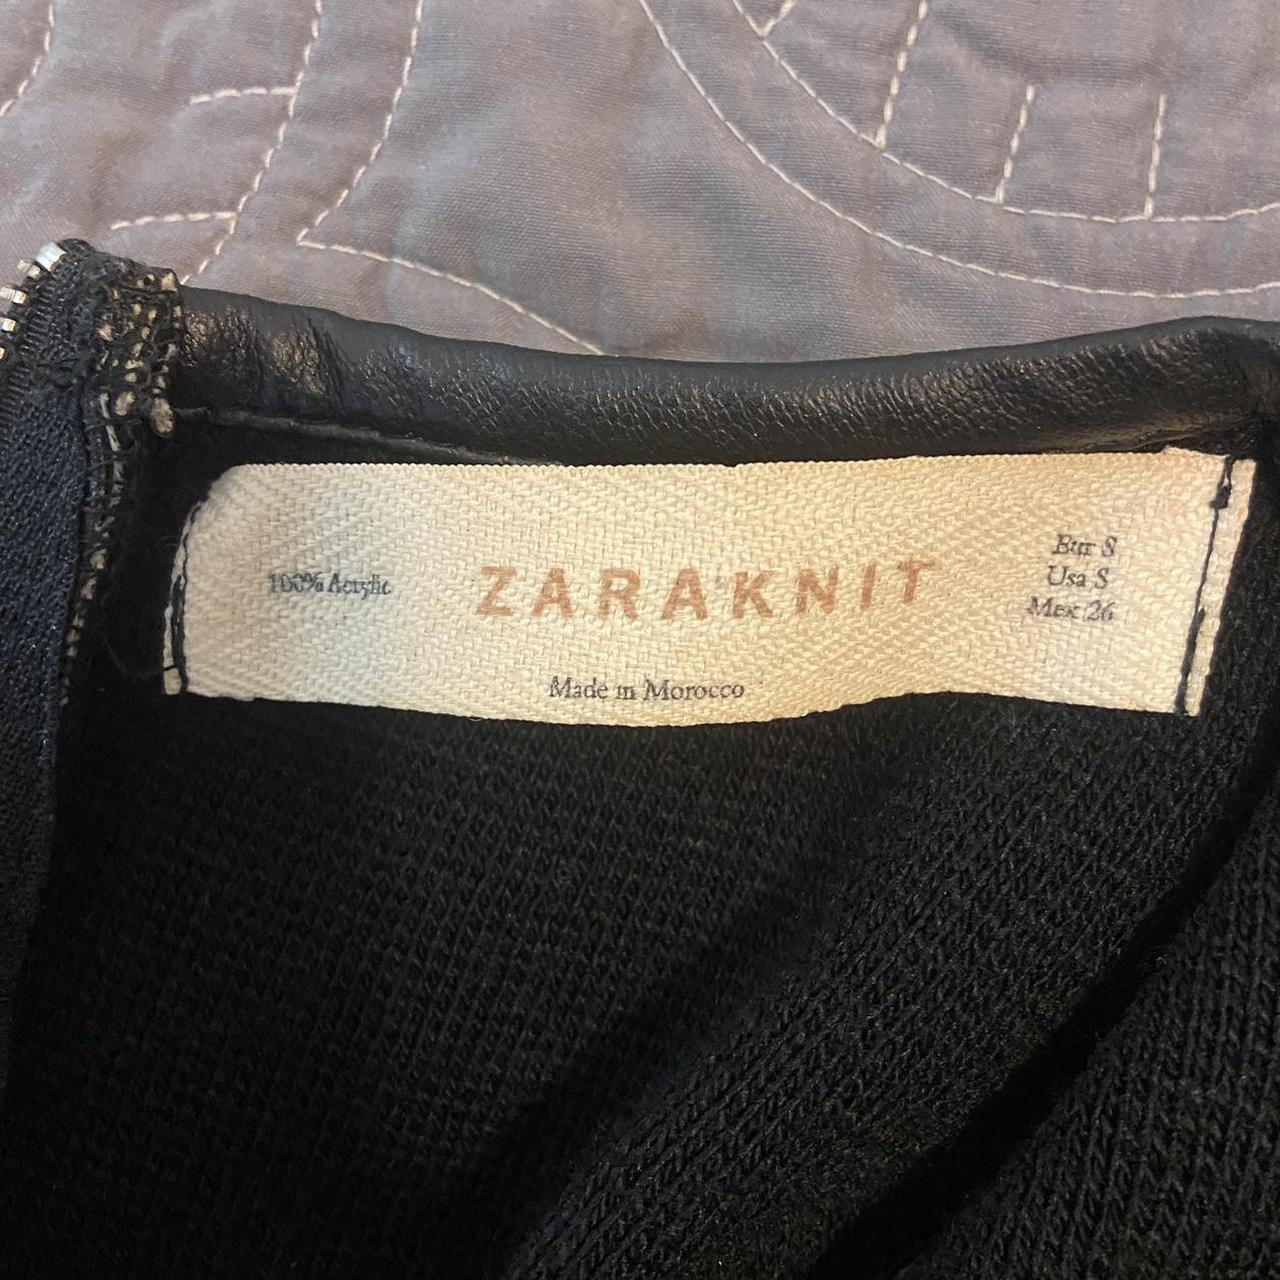 Sleeveless Knit A-line black dress ZaraKnit, 100%... - Depop